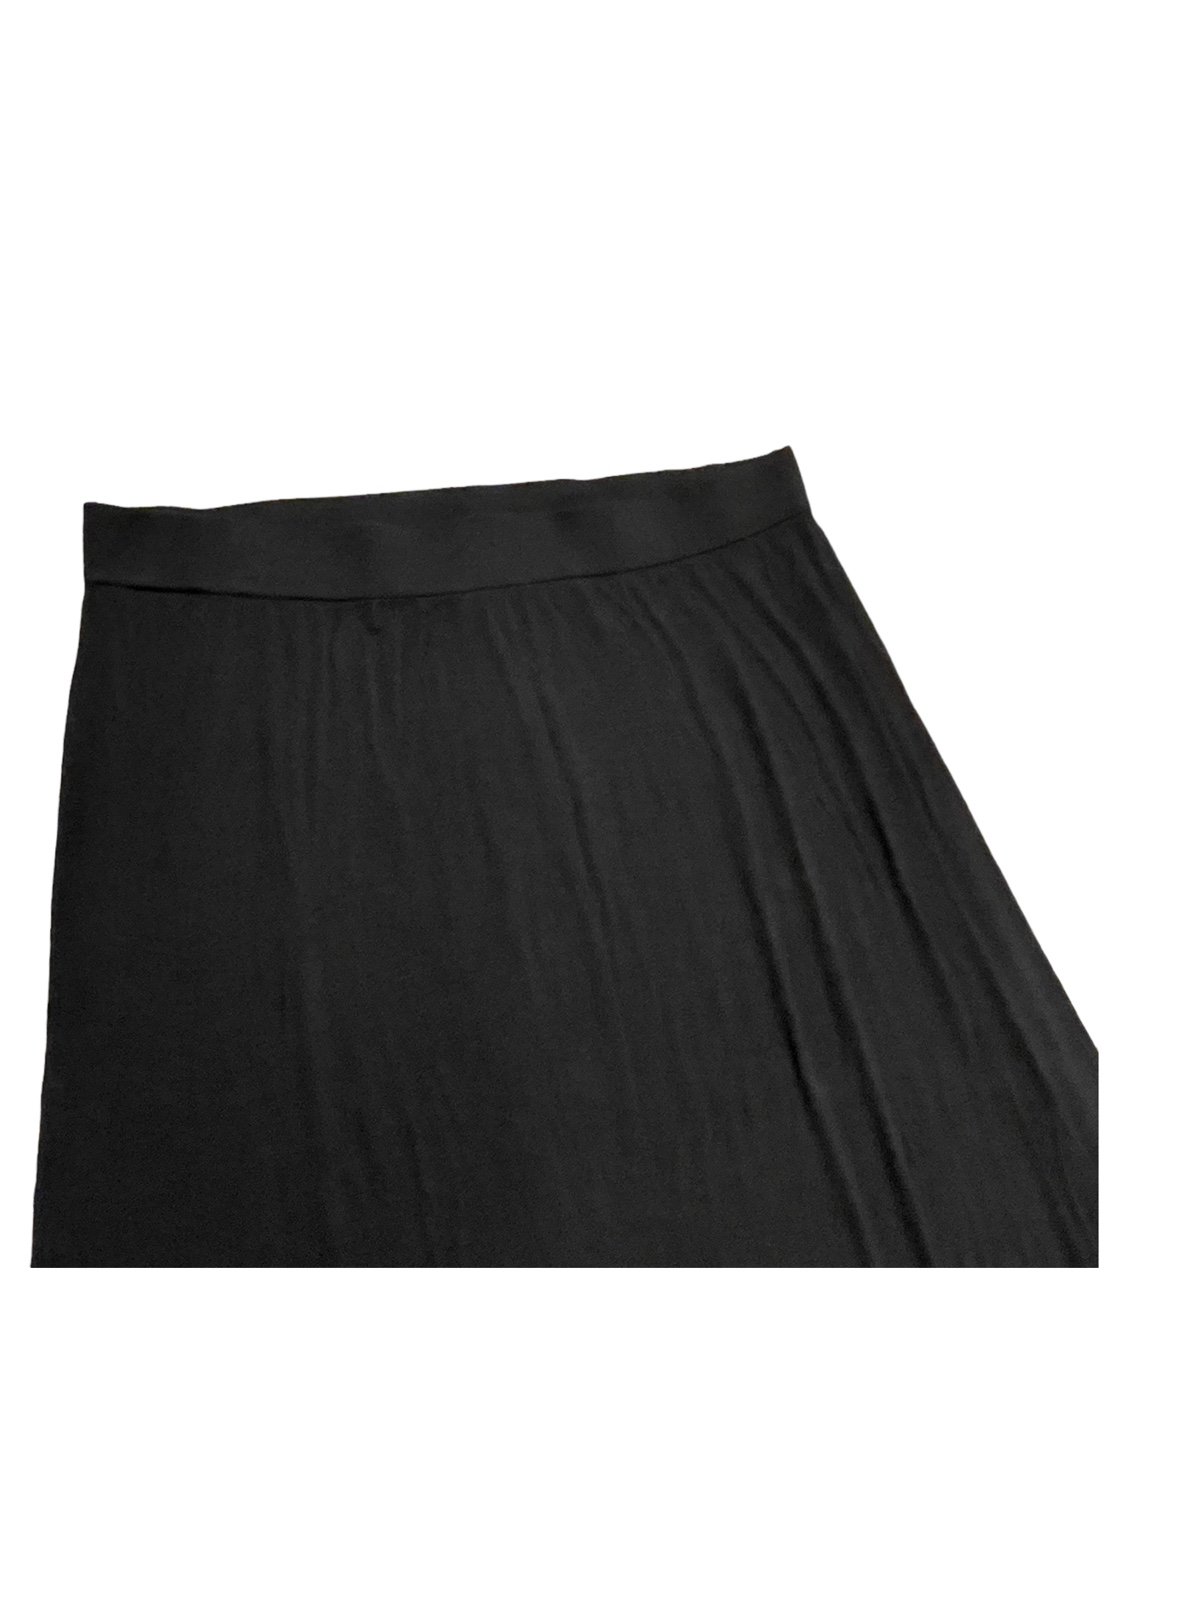 Perfect Lane Bryant Black Flowy Soft Comfort Women´s Skirt, Size 22/24, 42